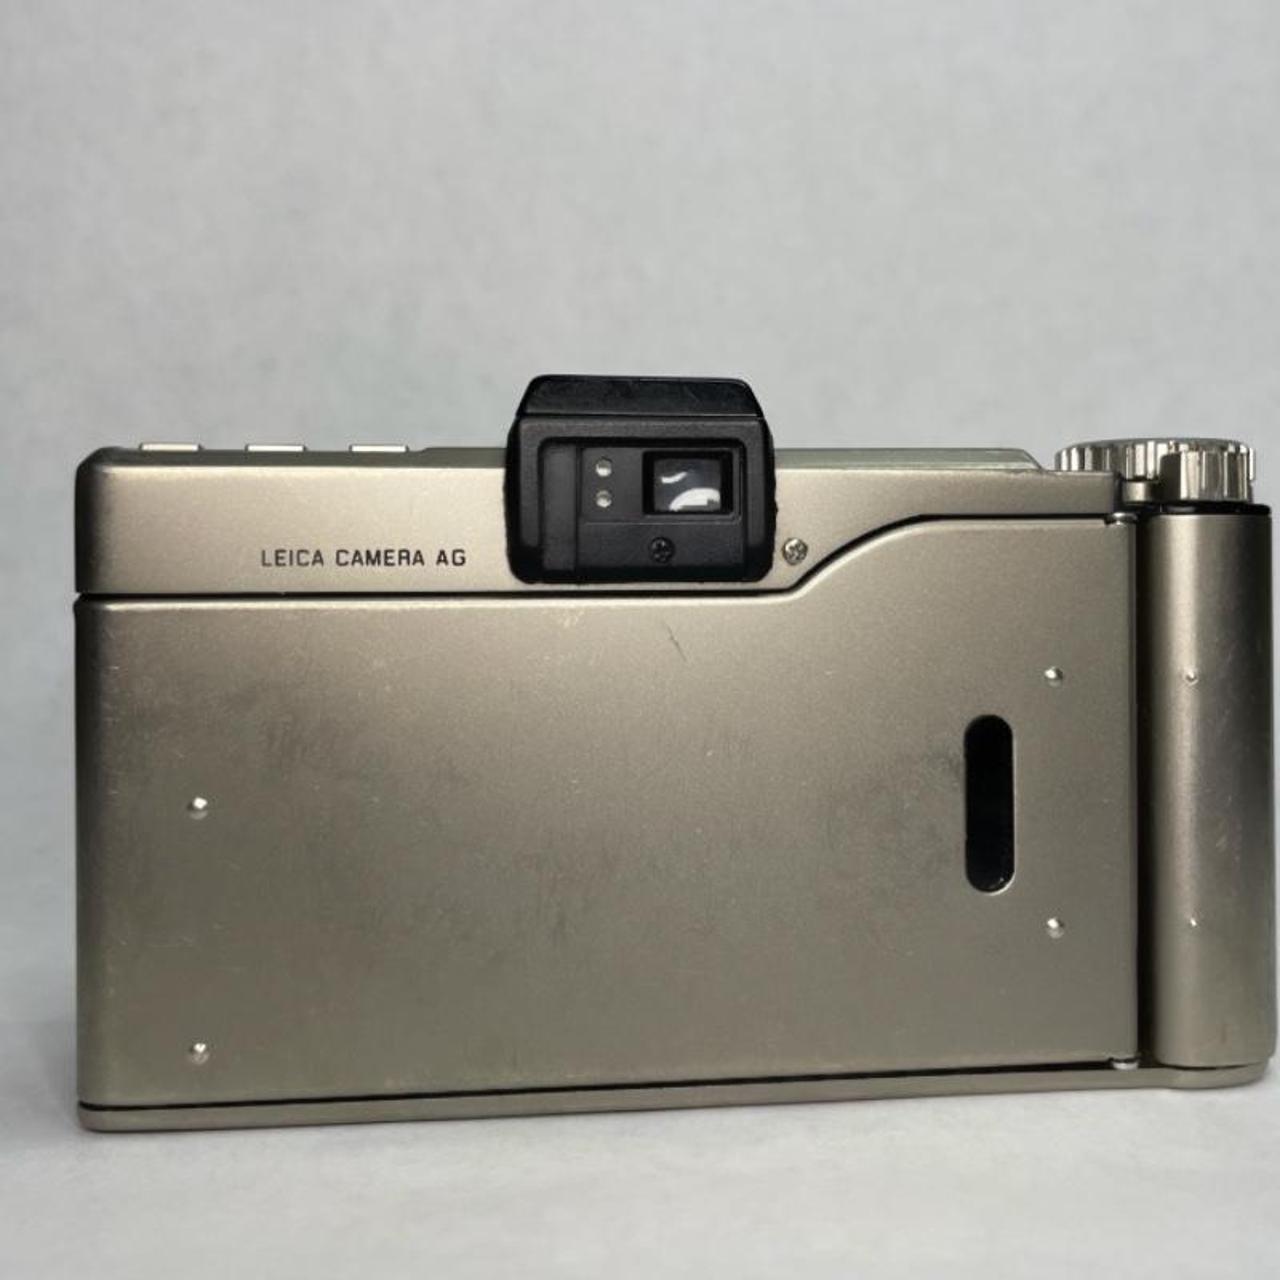 Leica Grey Cameras-and-accessories (5)